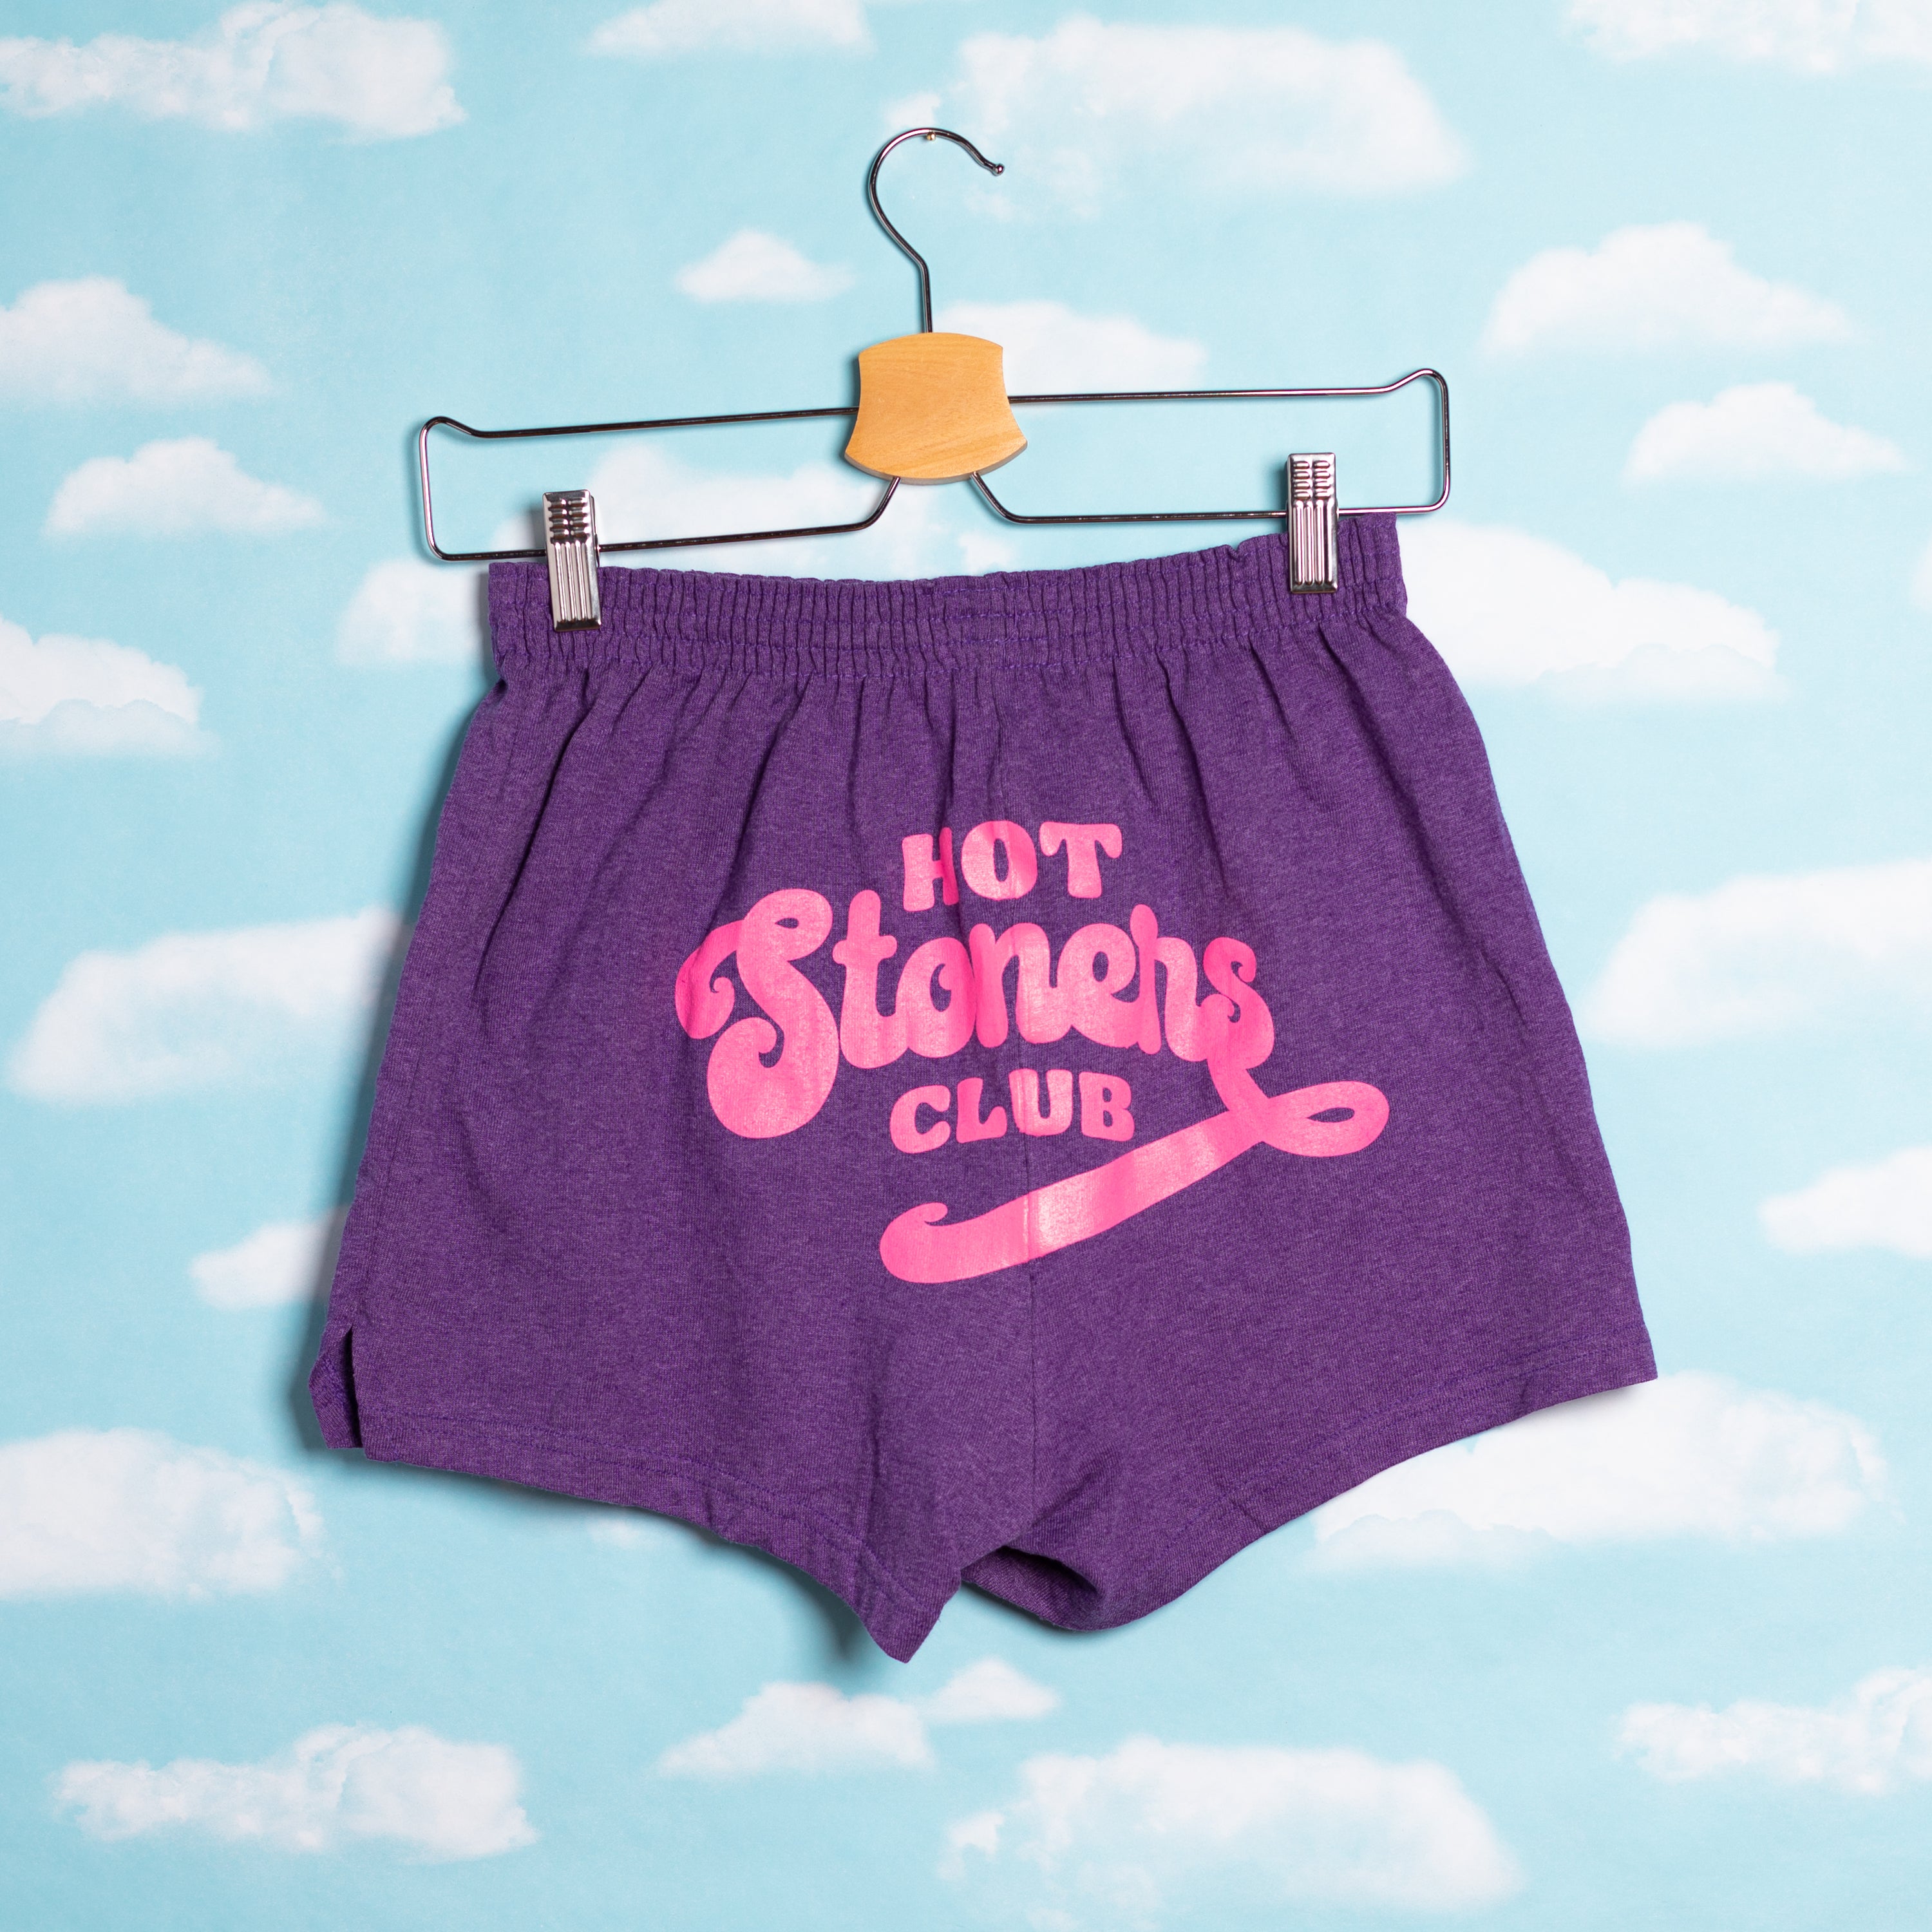 Hot Stoners Club Shorts